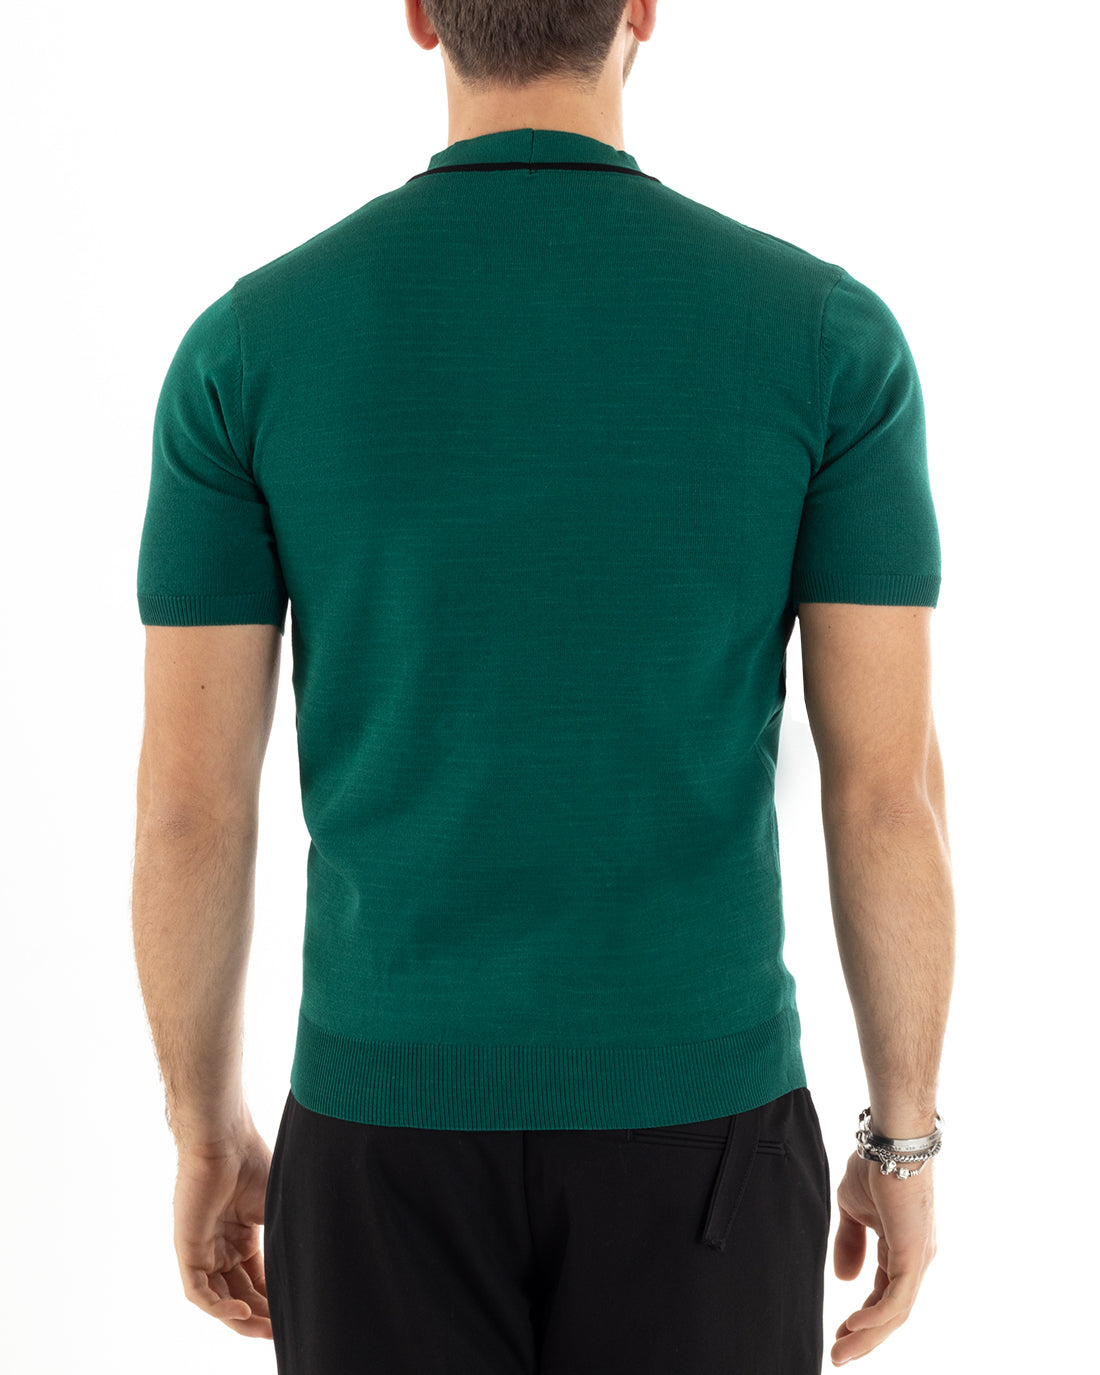 T-shirt Uomo Manica Corta Cardigan Verde Manica Corta Stampa Bottoni Casual GIOSAL-TS2872A